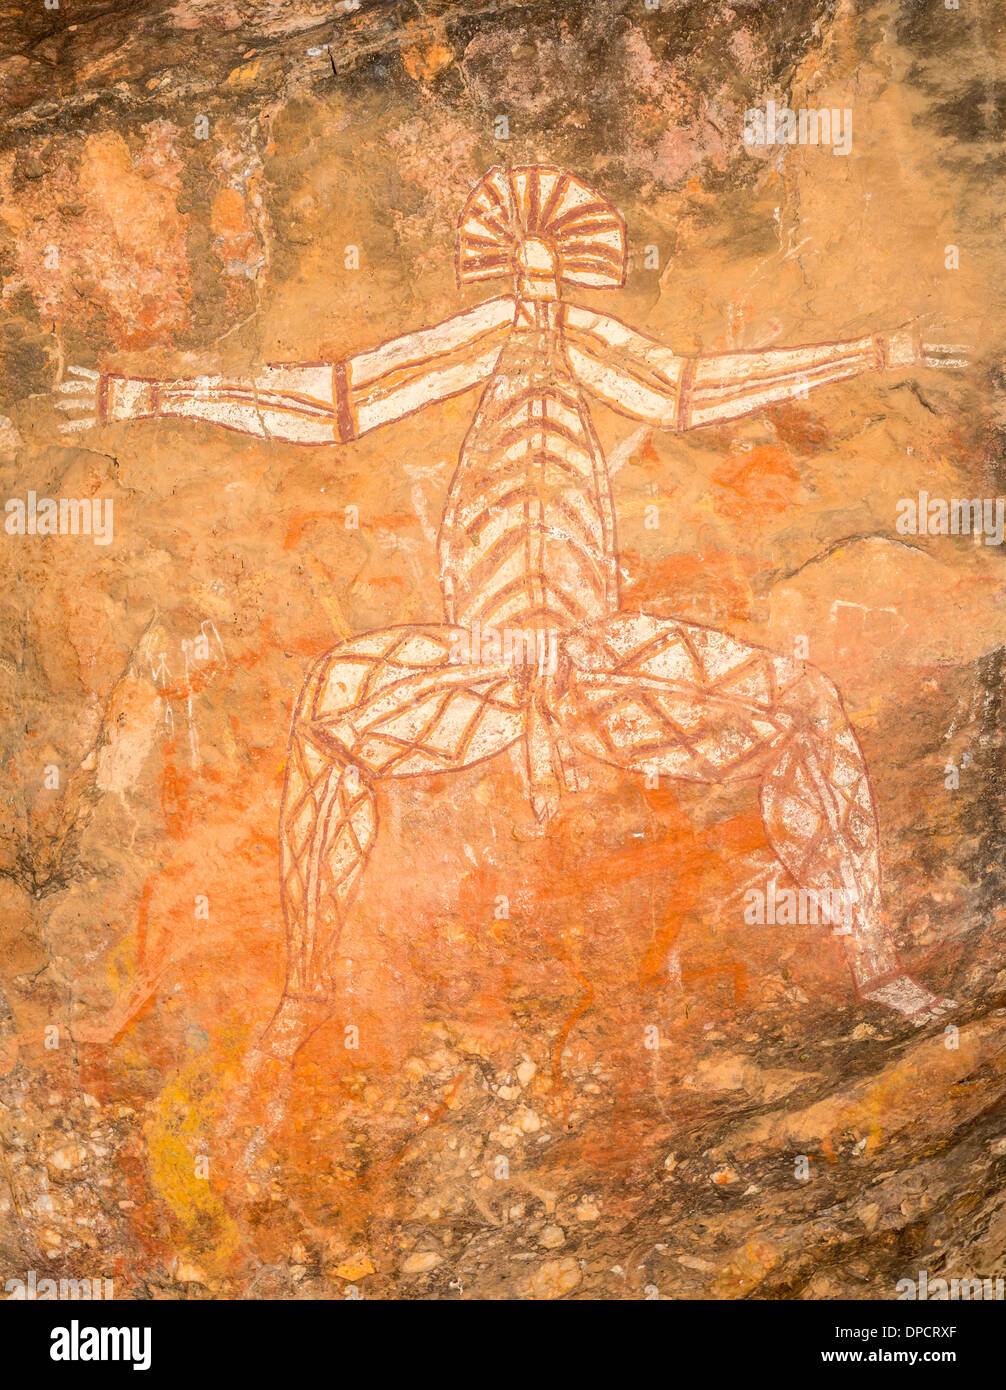 Nabulwinjbulwinj, rock painting, Australian Aboriginal art, Nourlangie Rock, Kakadu National Park, Northern Territory, Australia Stock Photo